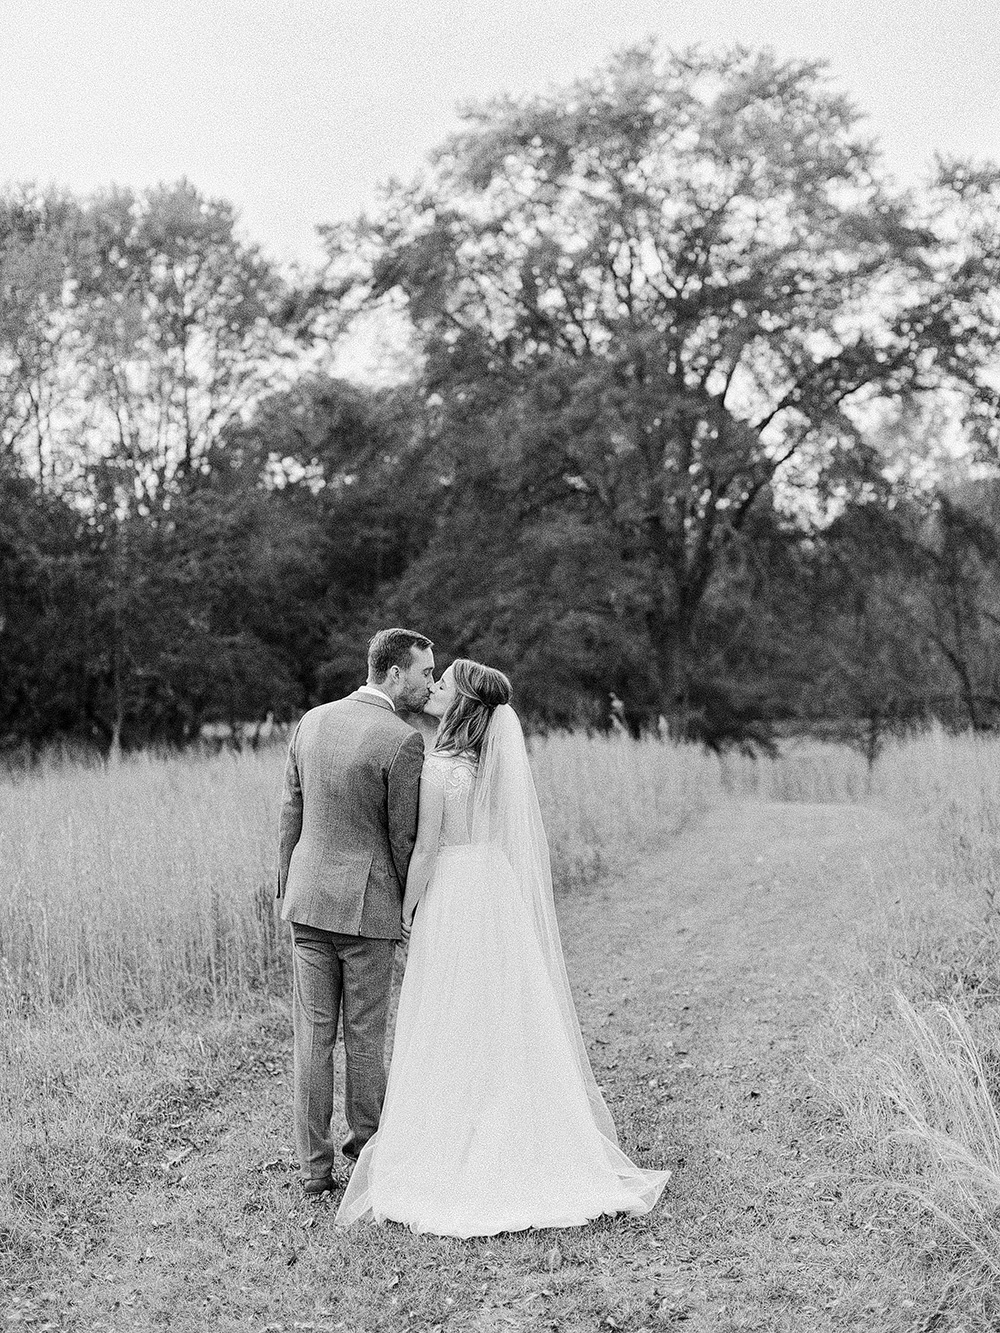 Caroline and Will's wedding at Vinewood Plantation